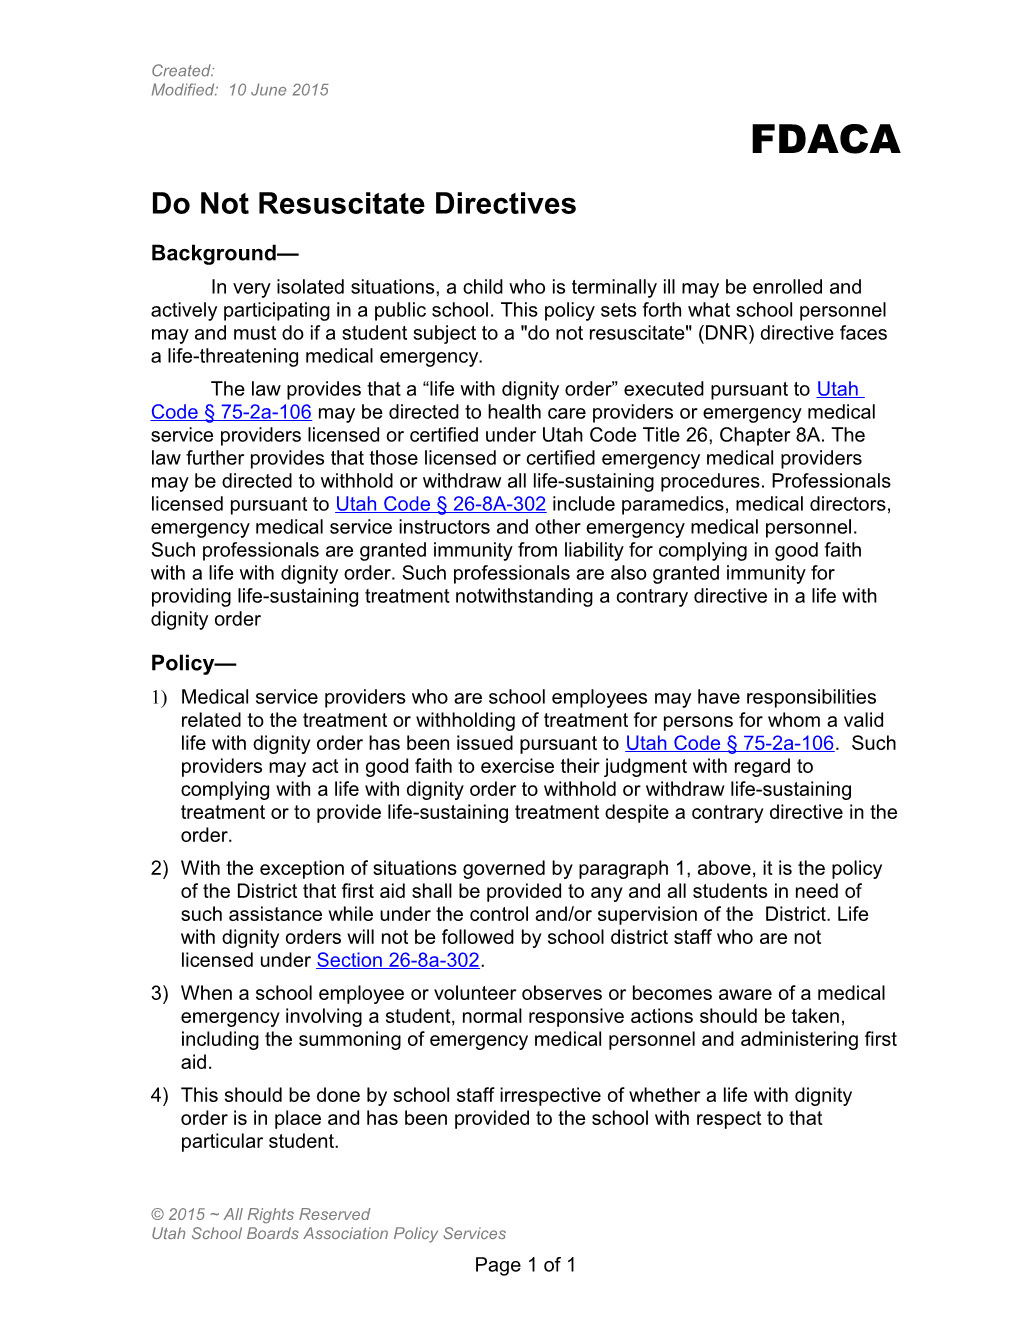 Do Not Resuscitate Directives